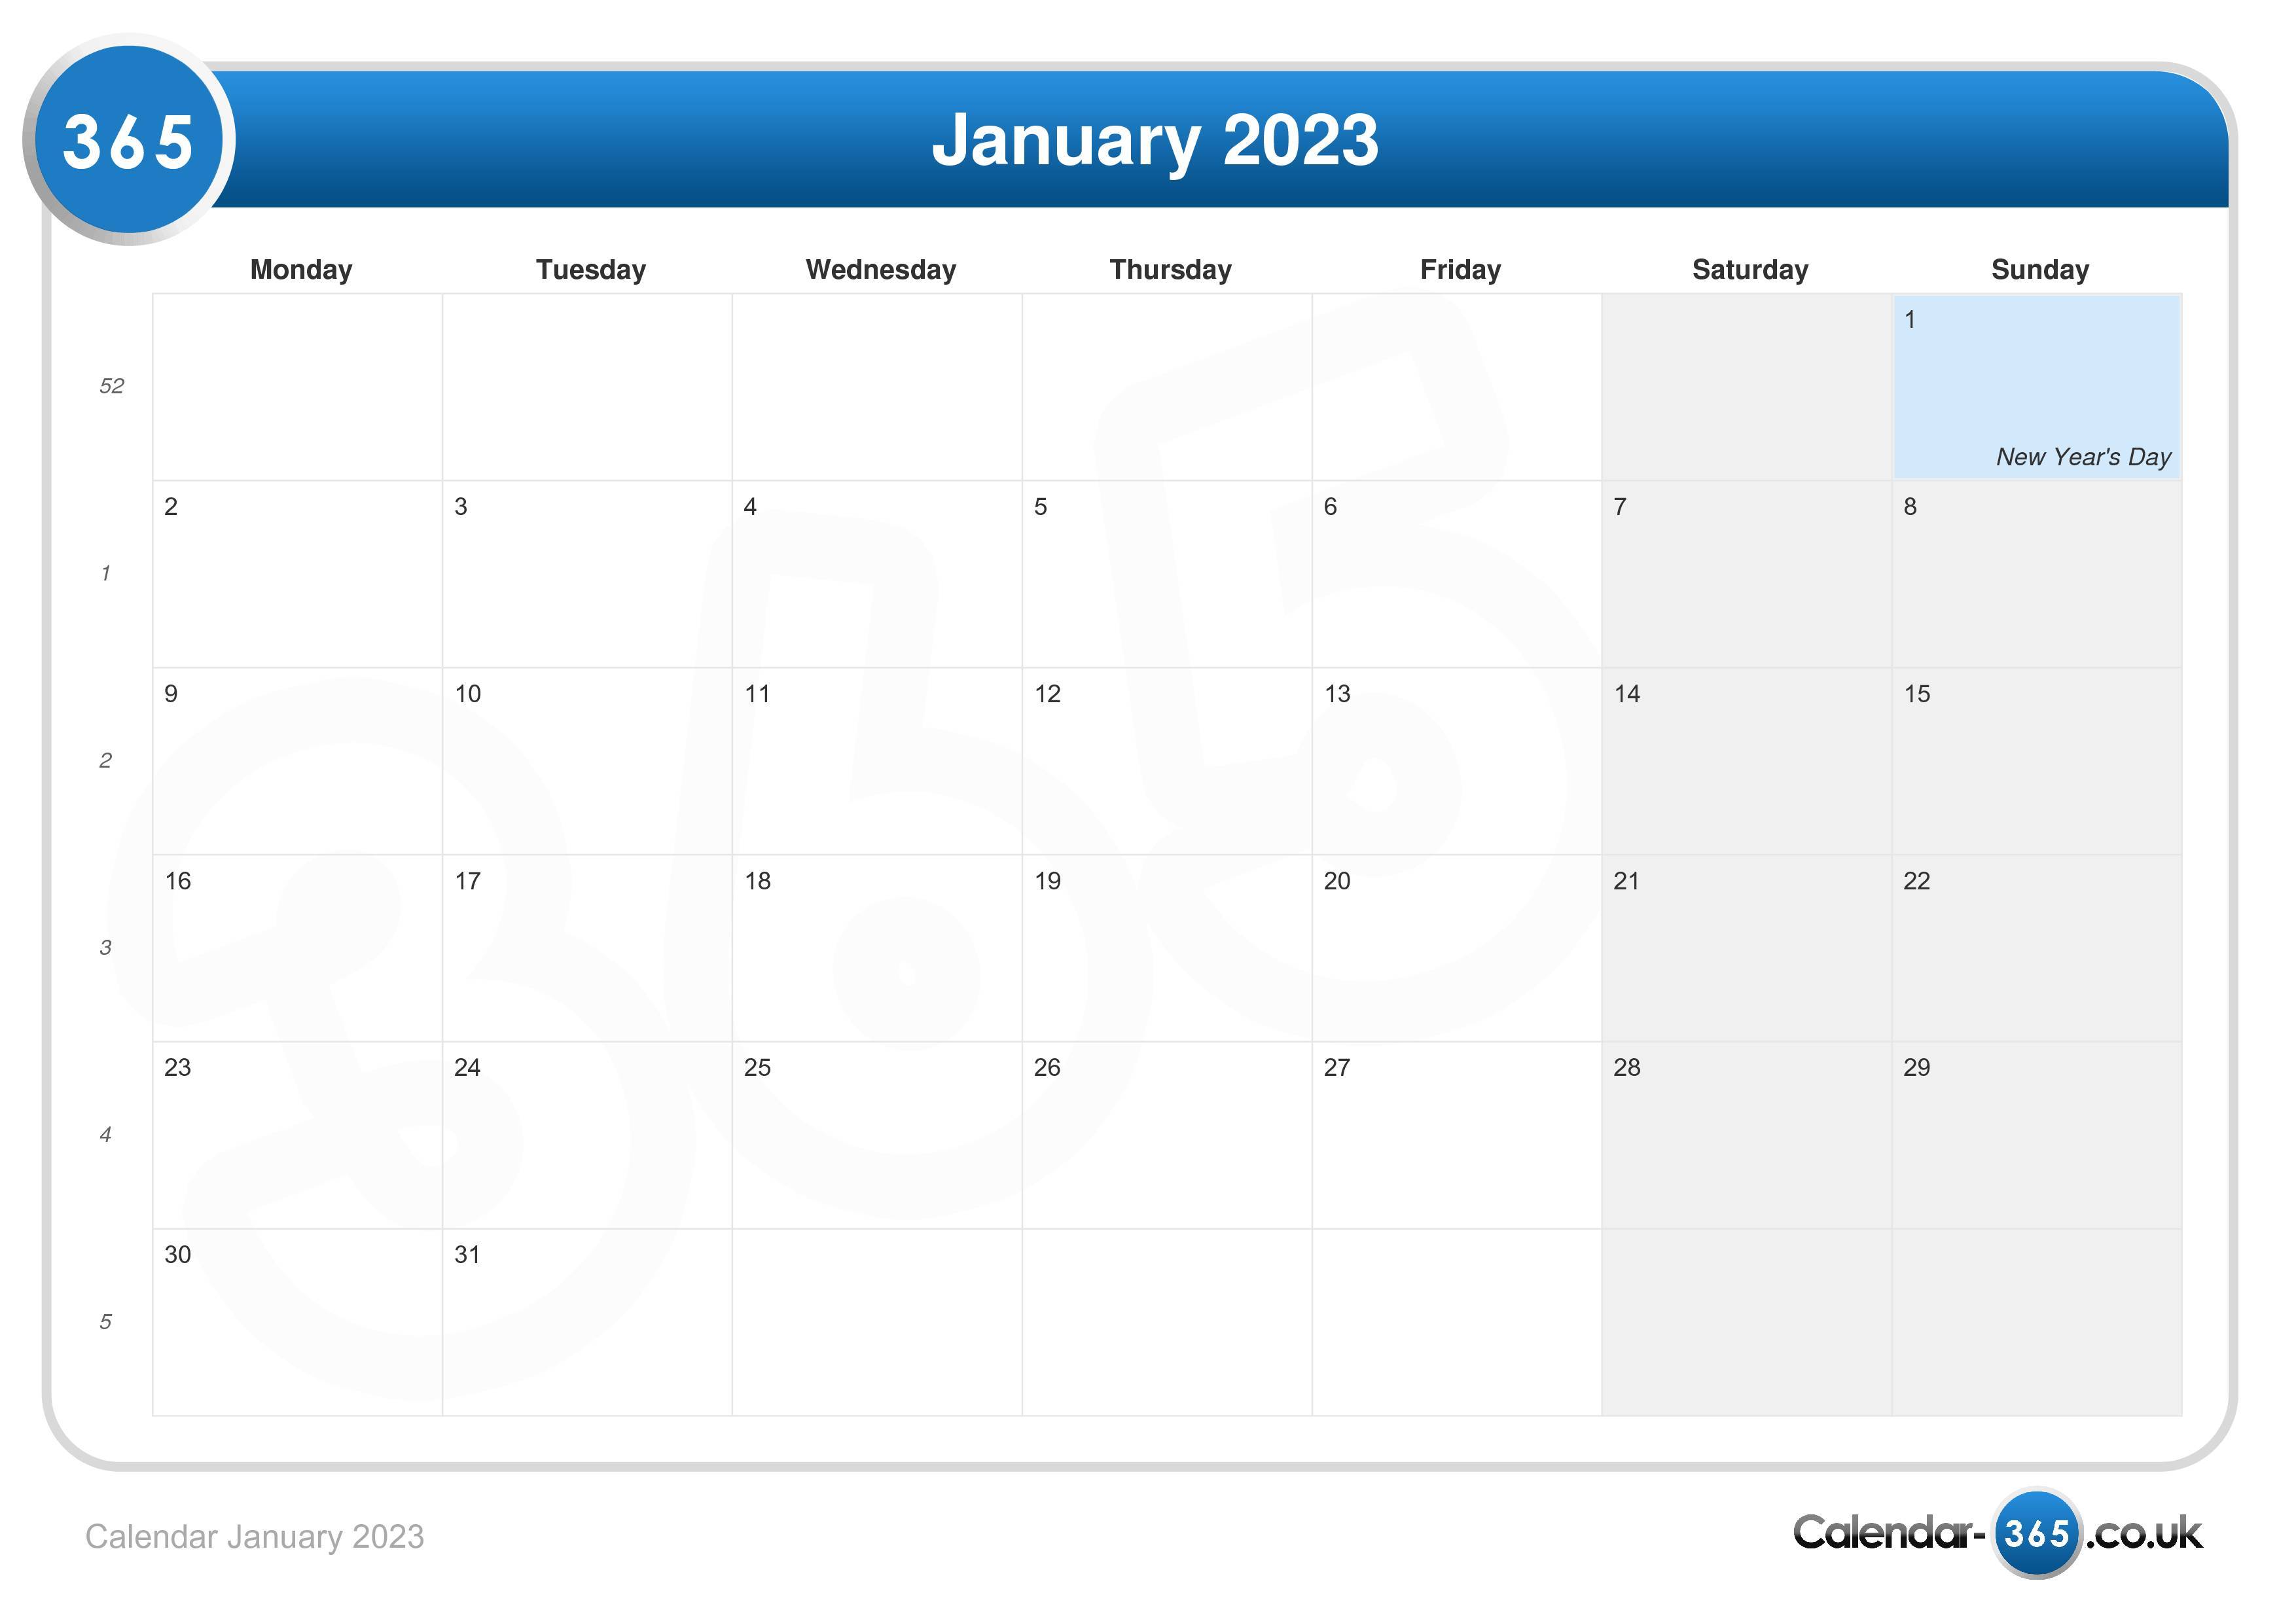 Calendar January 2023